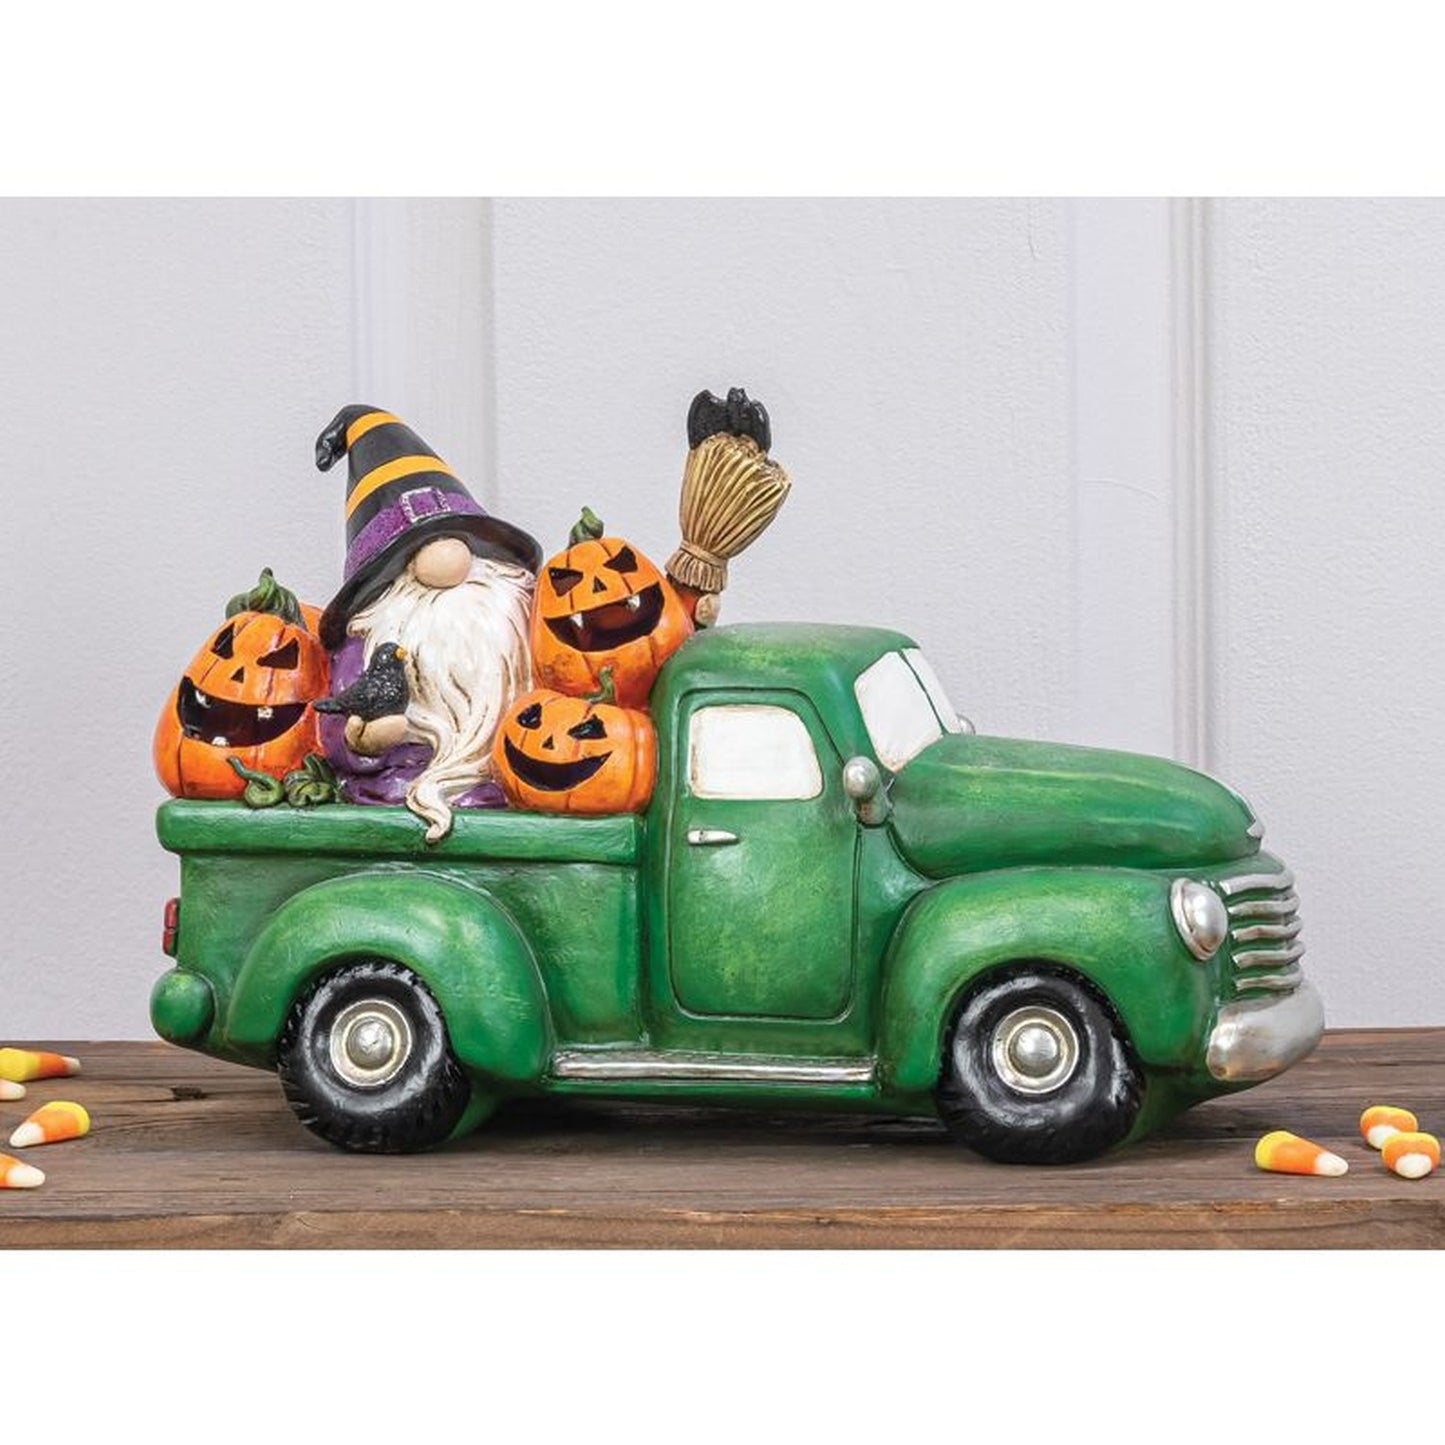 Hanna's Handiworks Halloween Gnome Truck With Lights